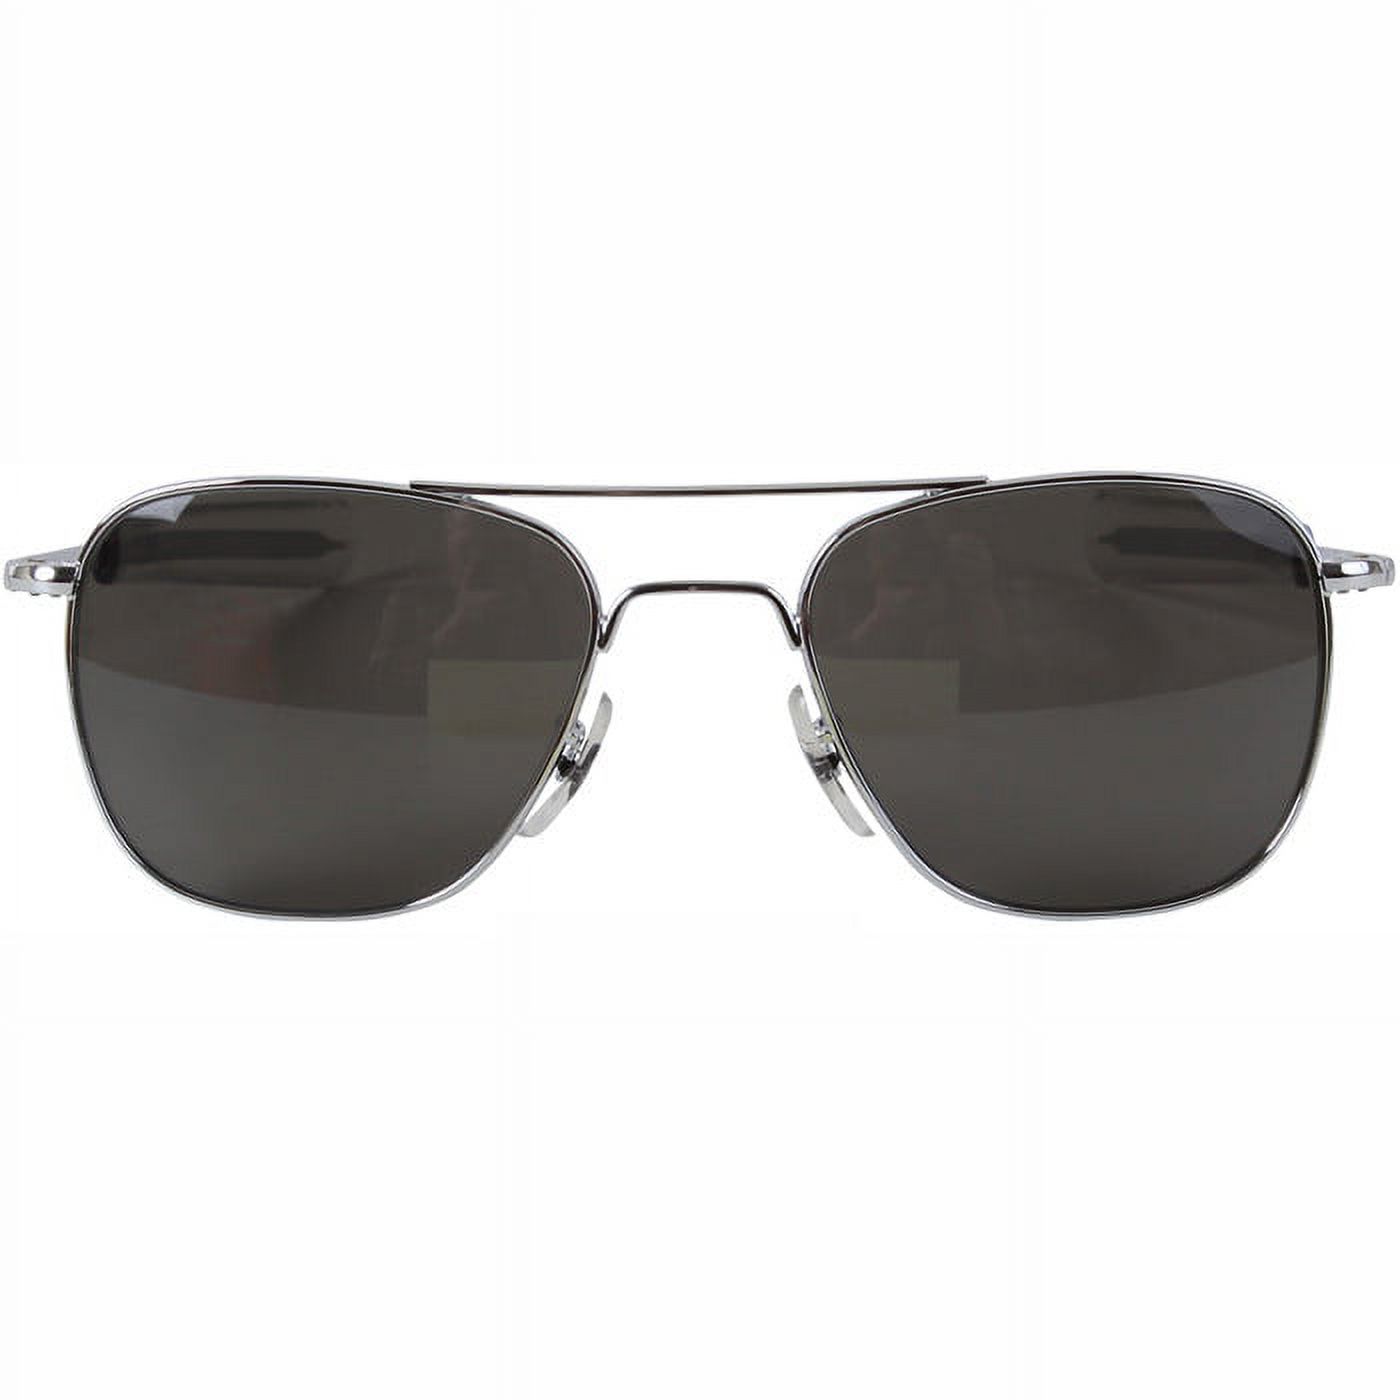 American Optics 52MM Polarized Sunglasses - 10706 - Chrome - image 3 of 4